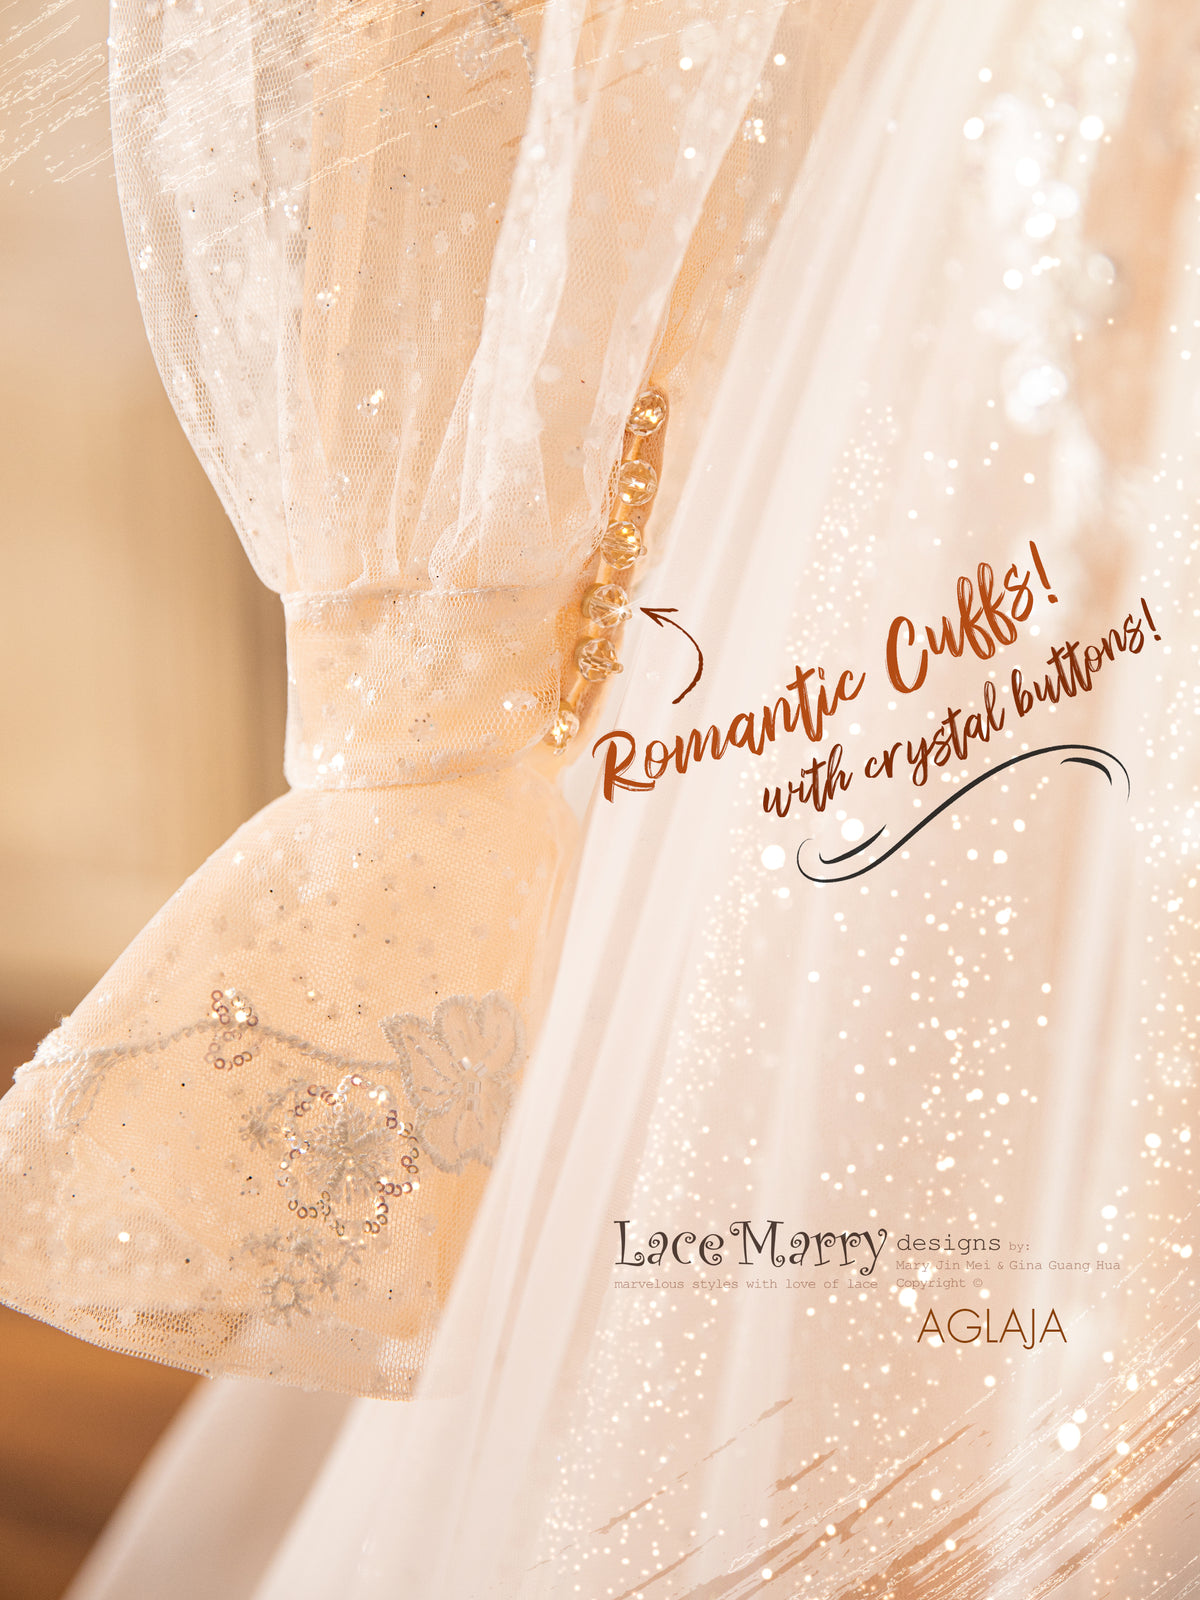 AGLAJA / Long Puff Sleeves Wedding Dress with Glitter Skirt